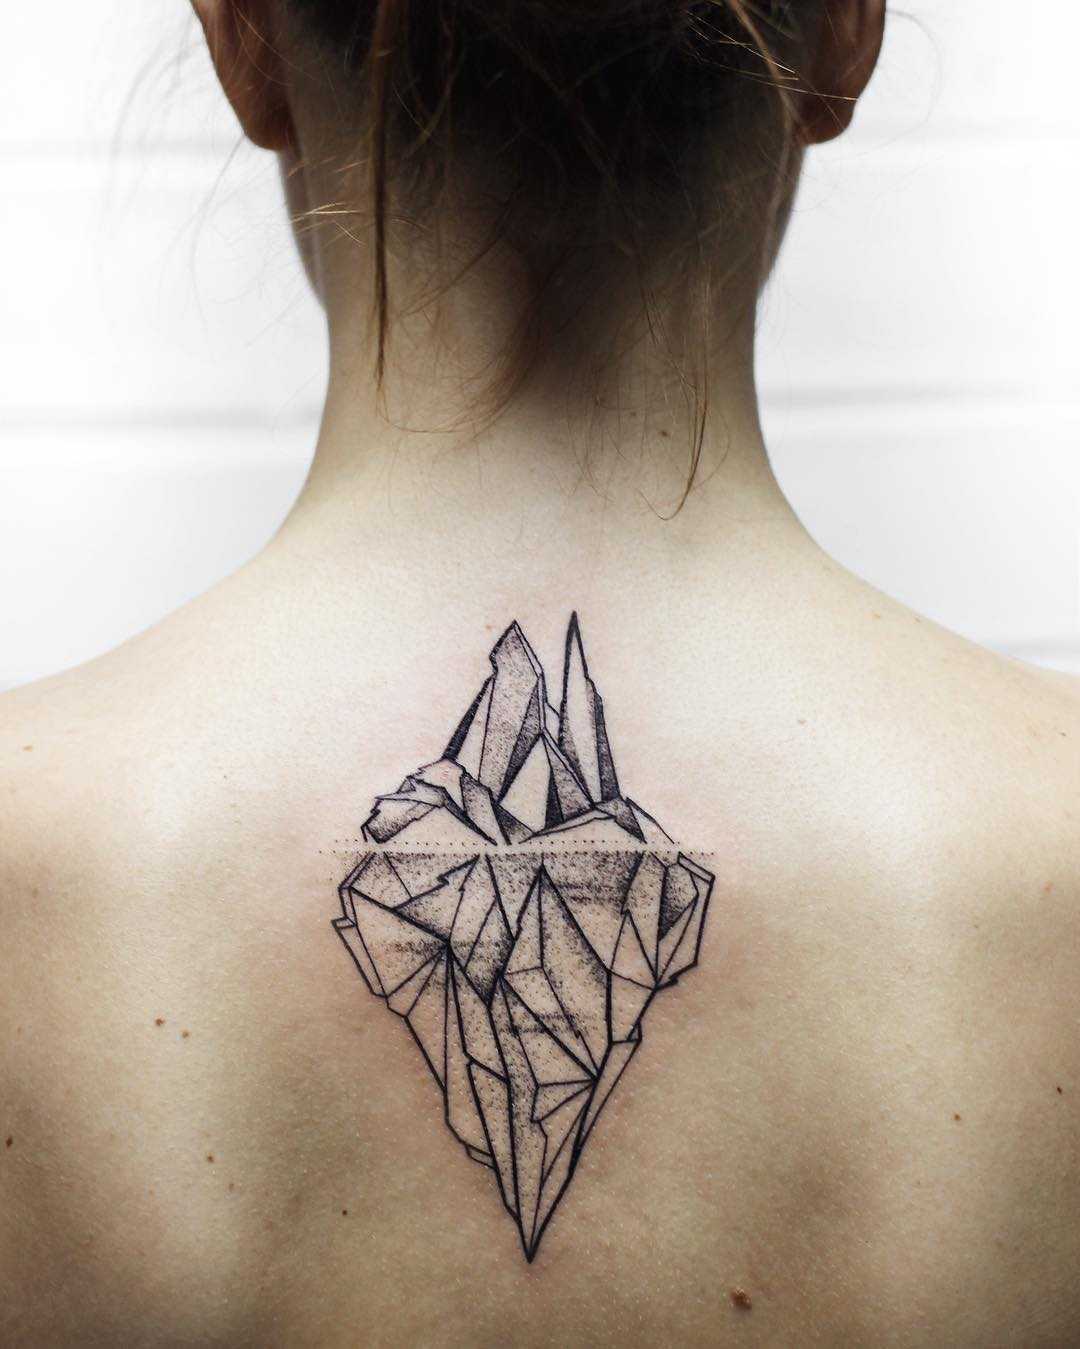 Iceberg tattoo on the upper back